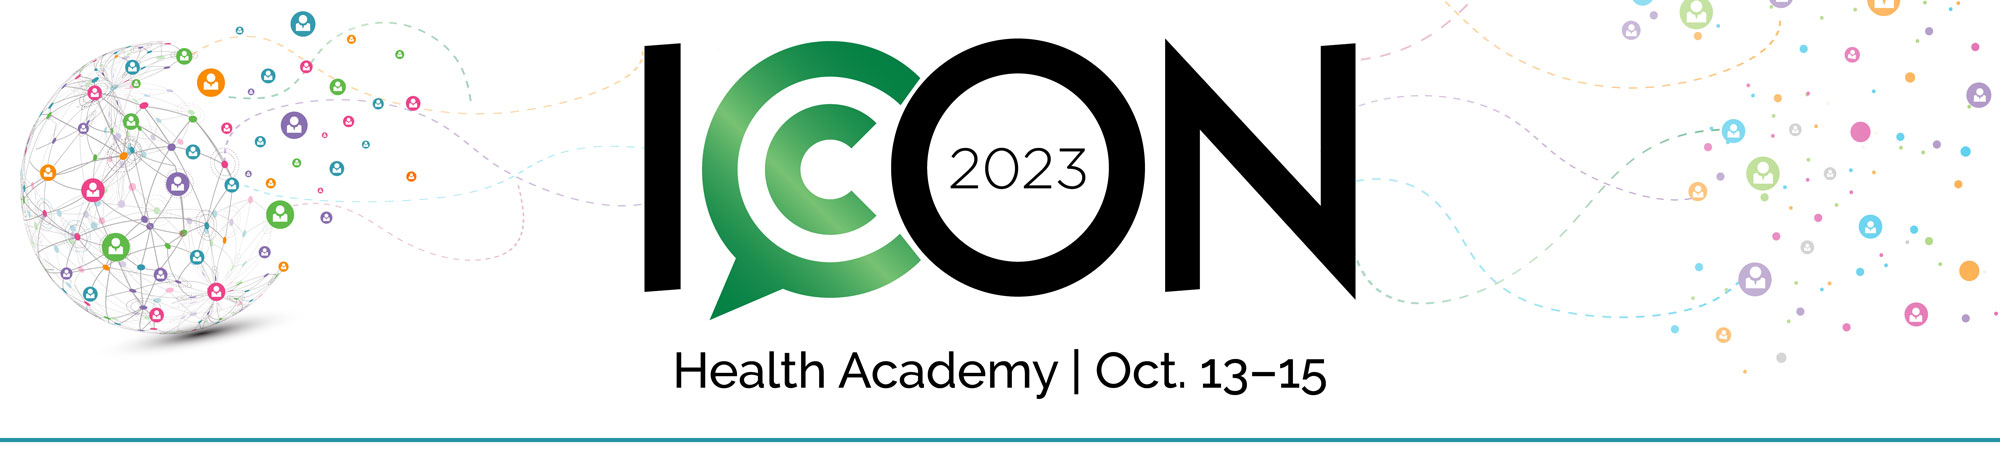 PRSA Health Academy ICON 2023 Conference